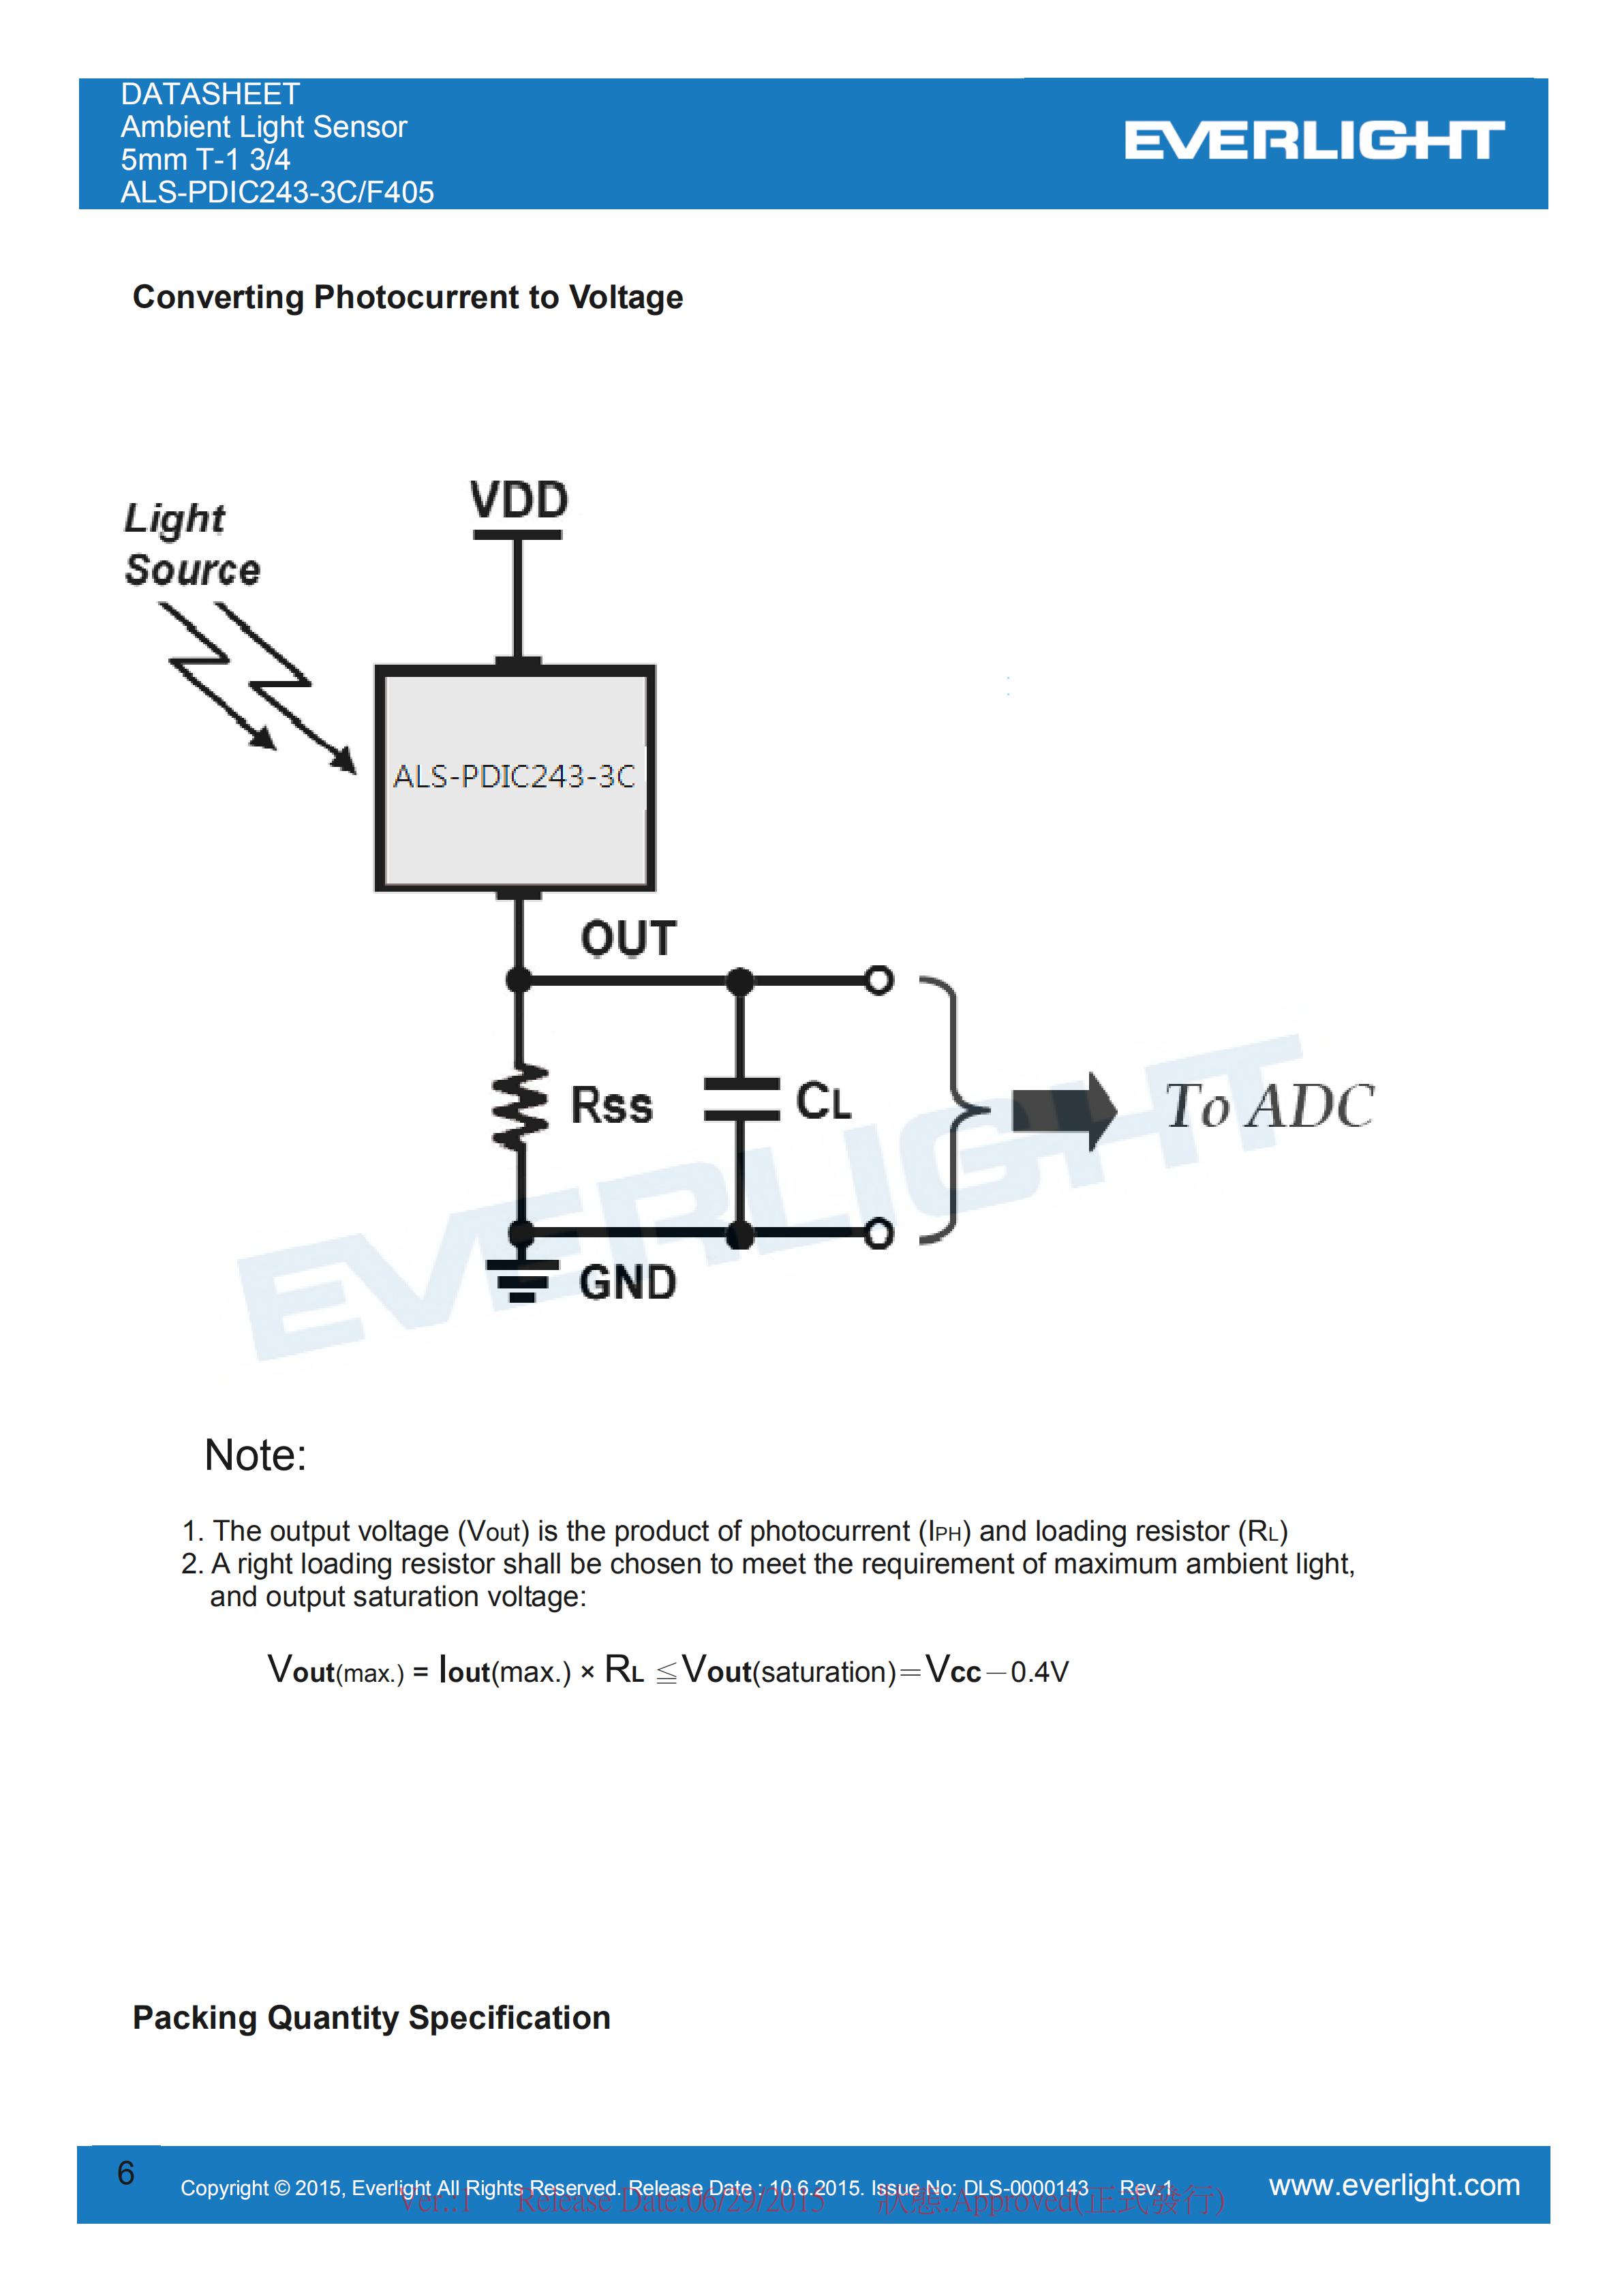 Everlight Ambient Light Sensor ALS-PDIC243-3C/F405 Datasheet